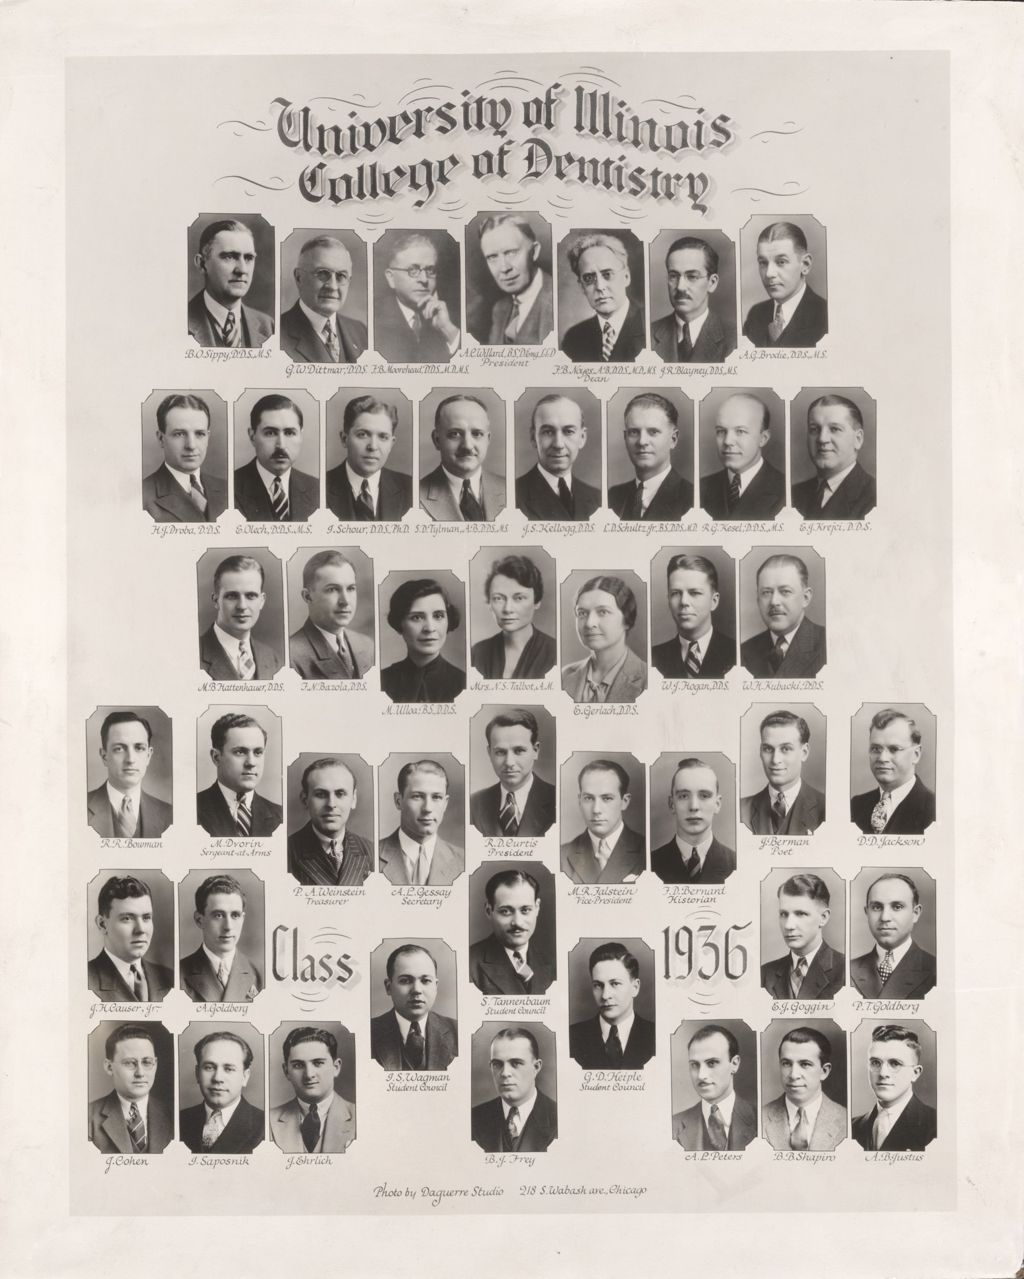 1936 graduating class, University of Illinois College of Dentistry